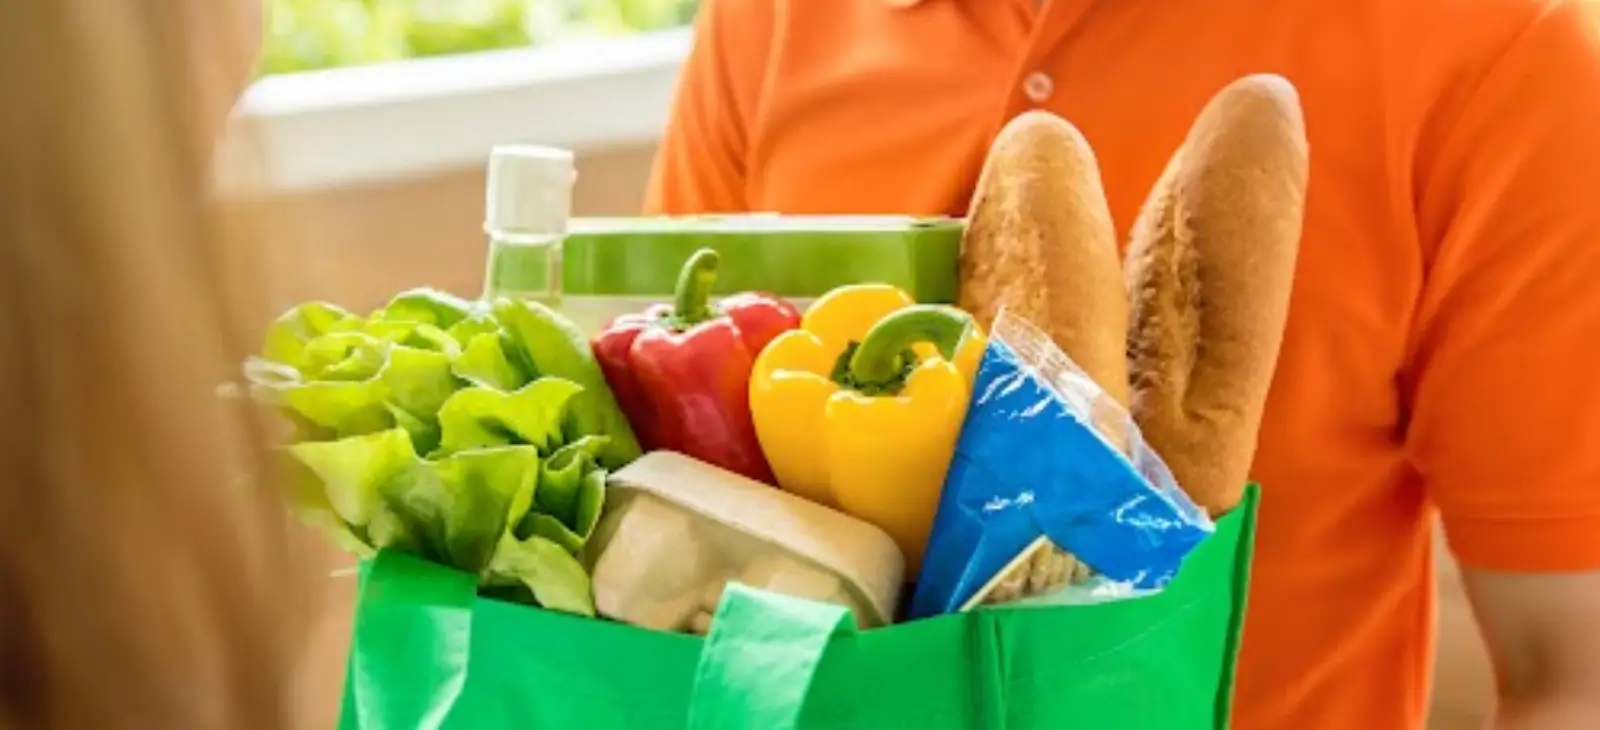 grocery supermarket - Almaya Group
